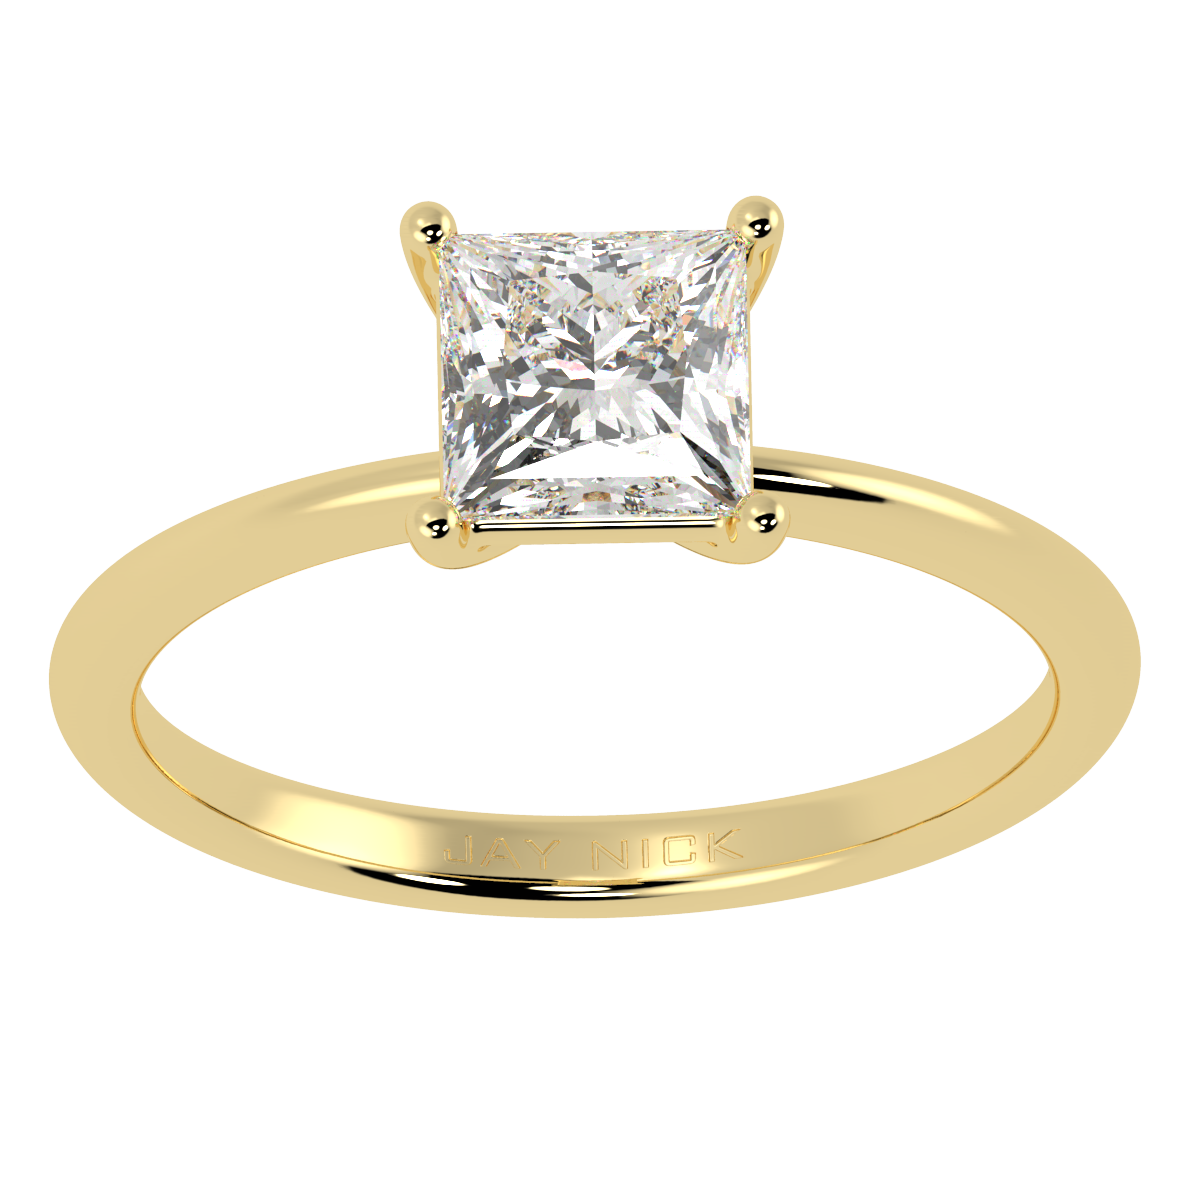 Modern Princess Cut Solitaire Ring